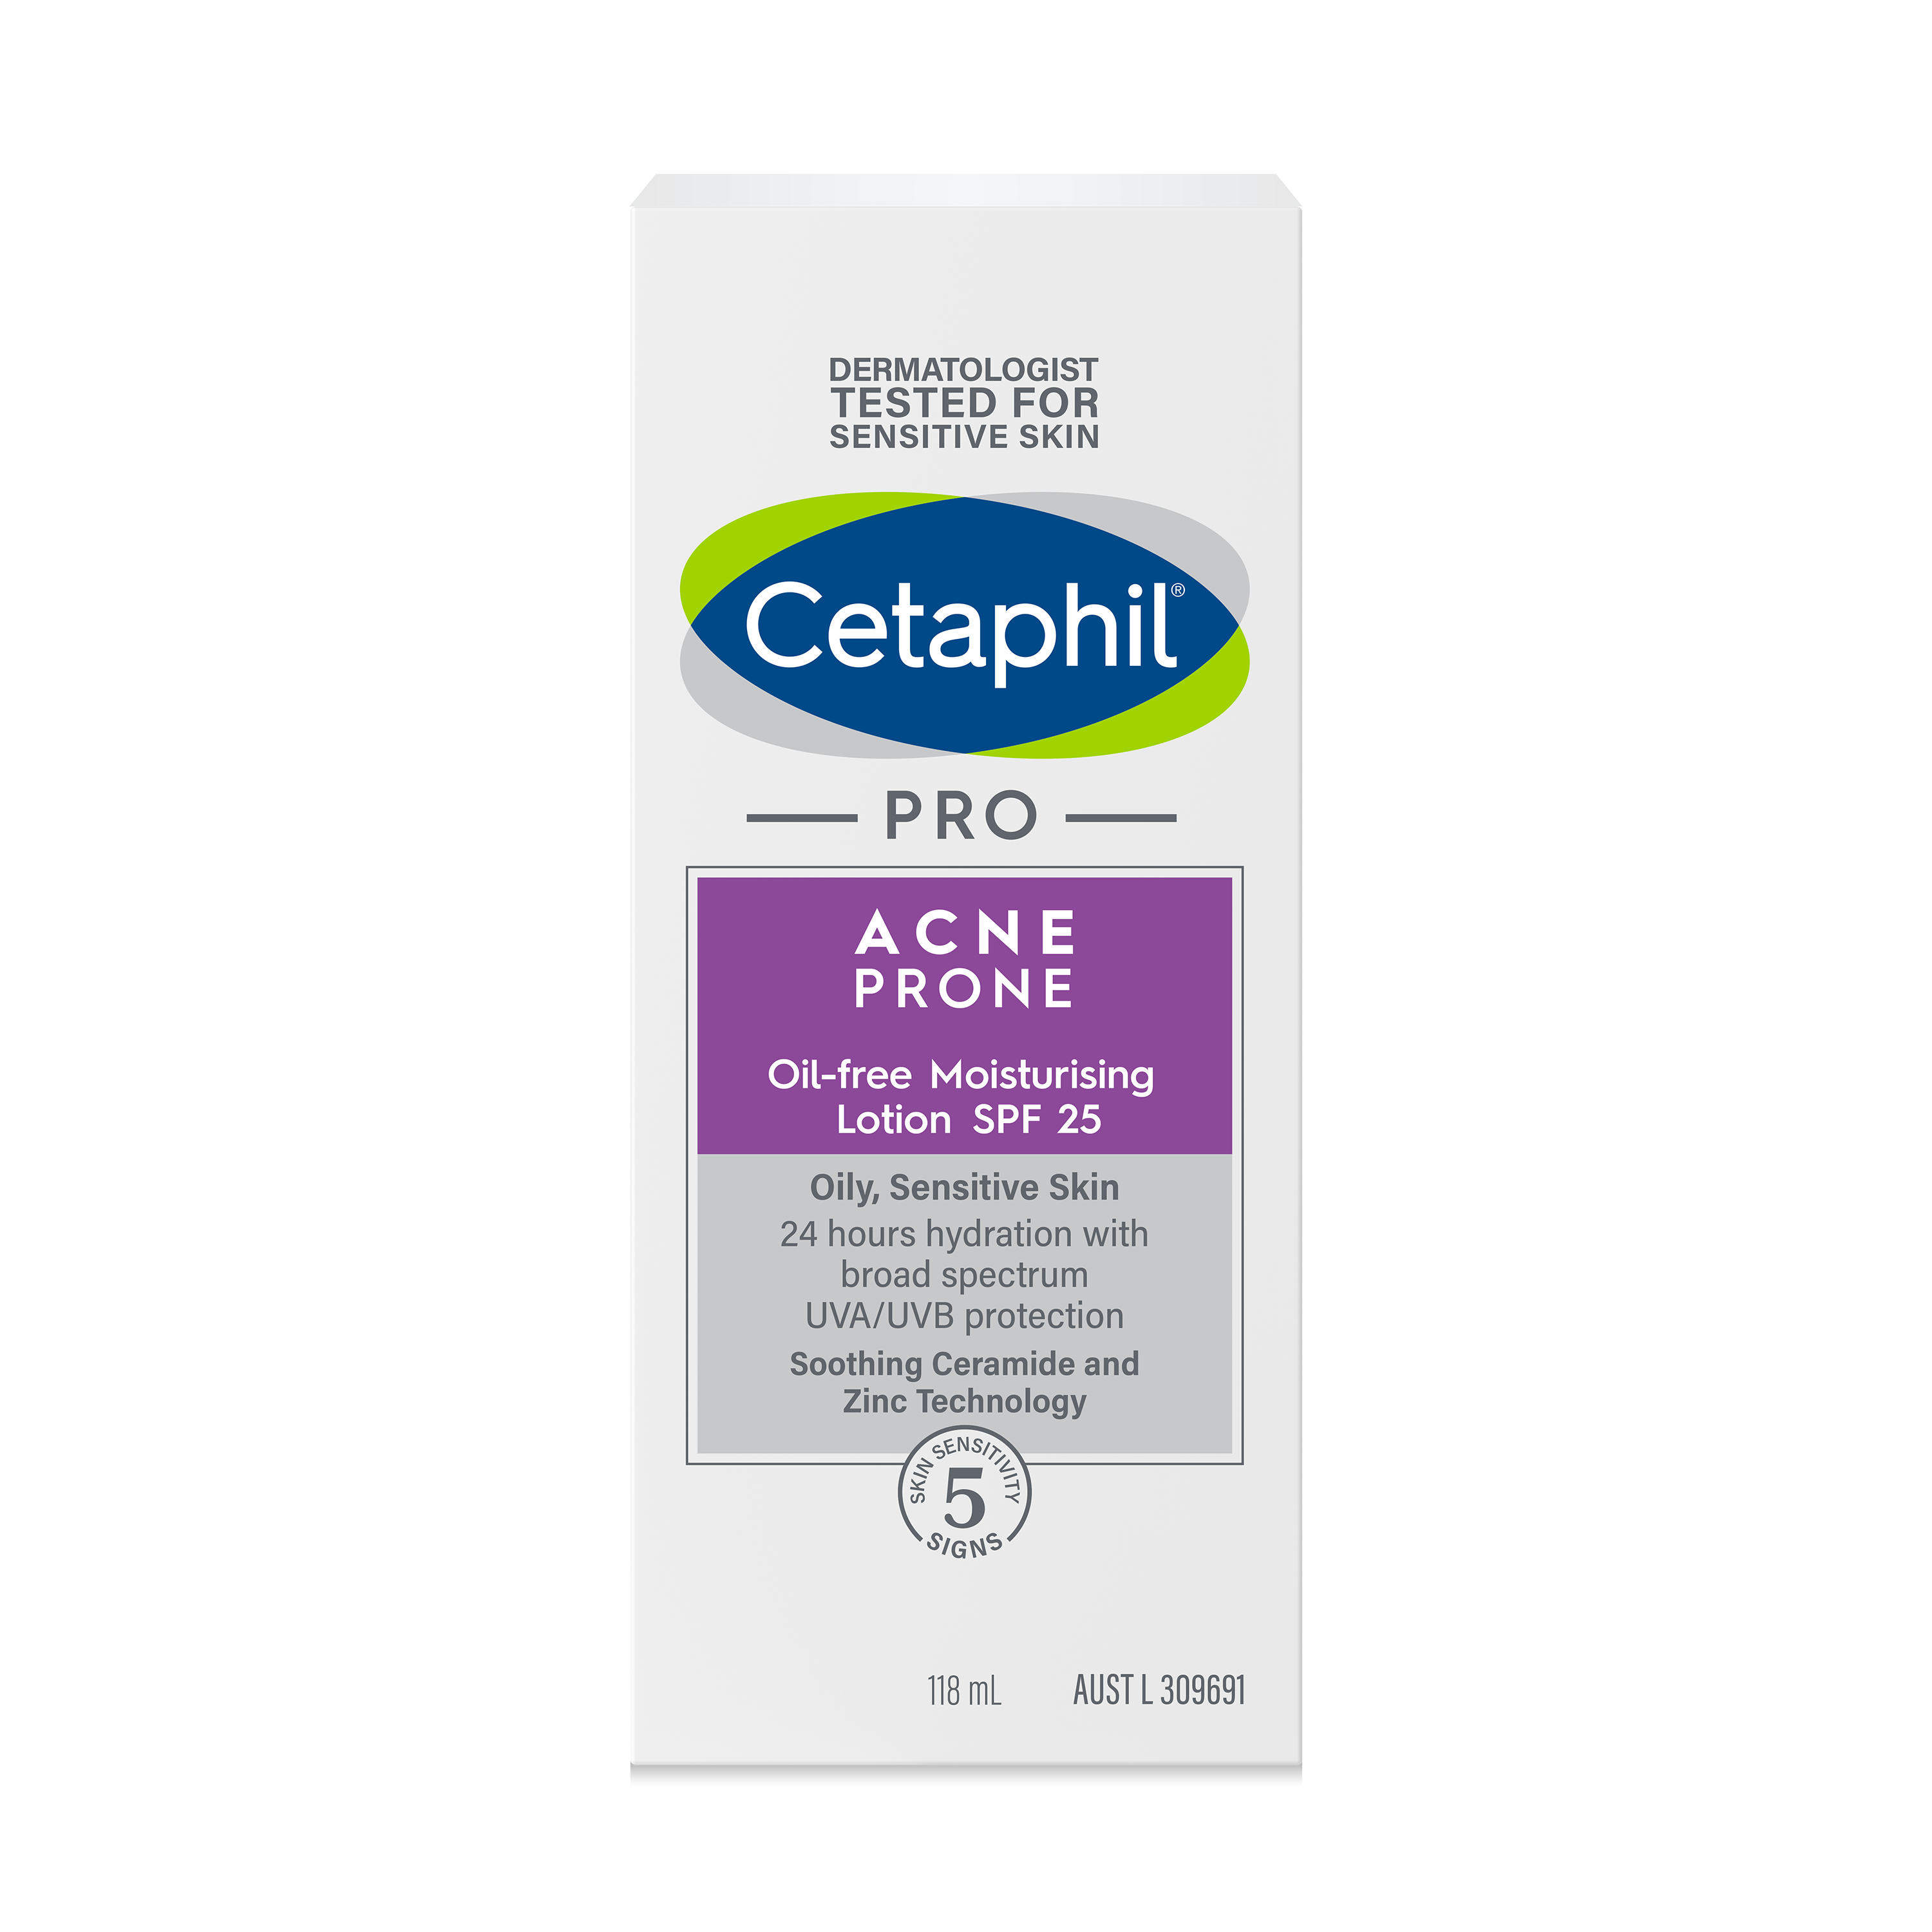 Cetaphil Pro Acne Prone Oil-free Moisturizing Lotion SPF 25